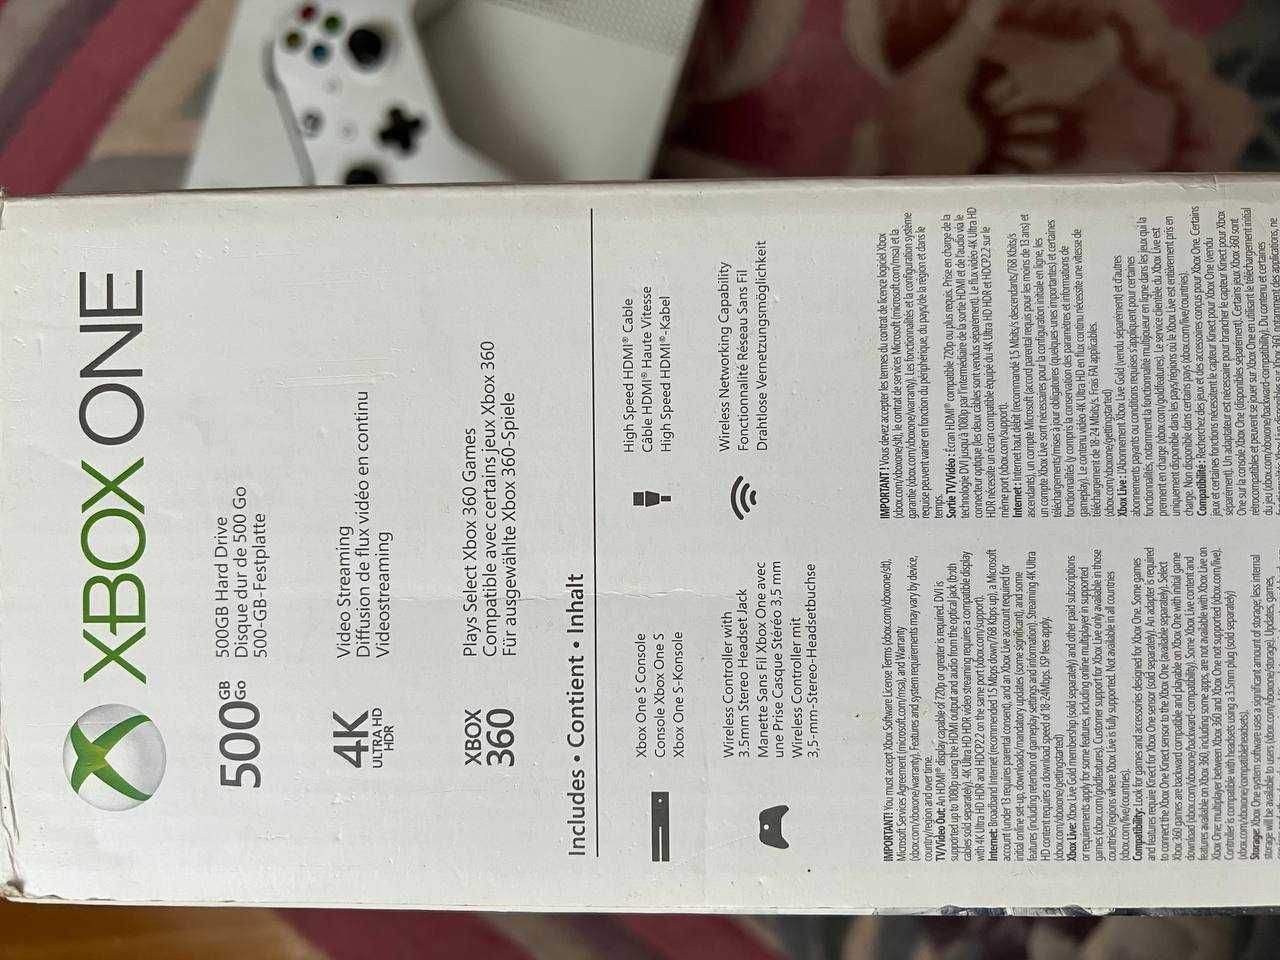 Xbox One S 500Gb + 2 джойстики.